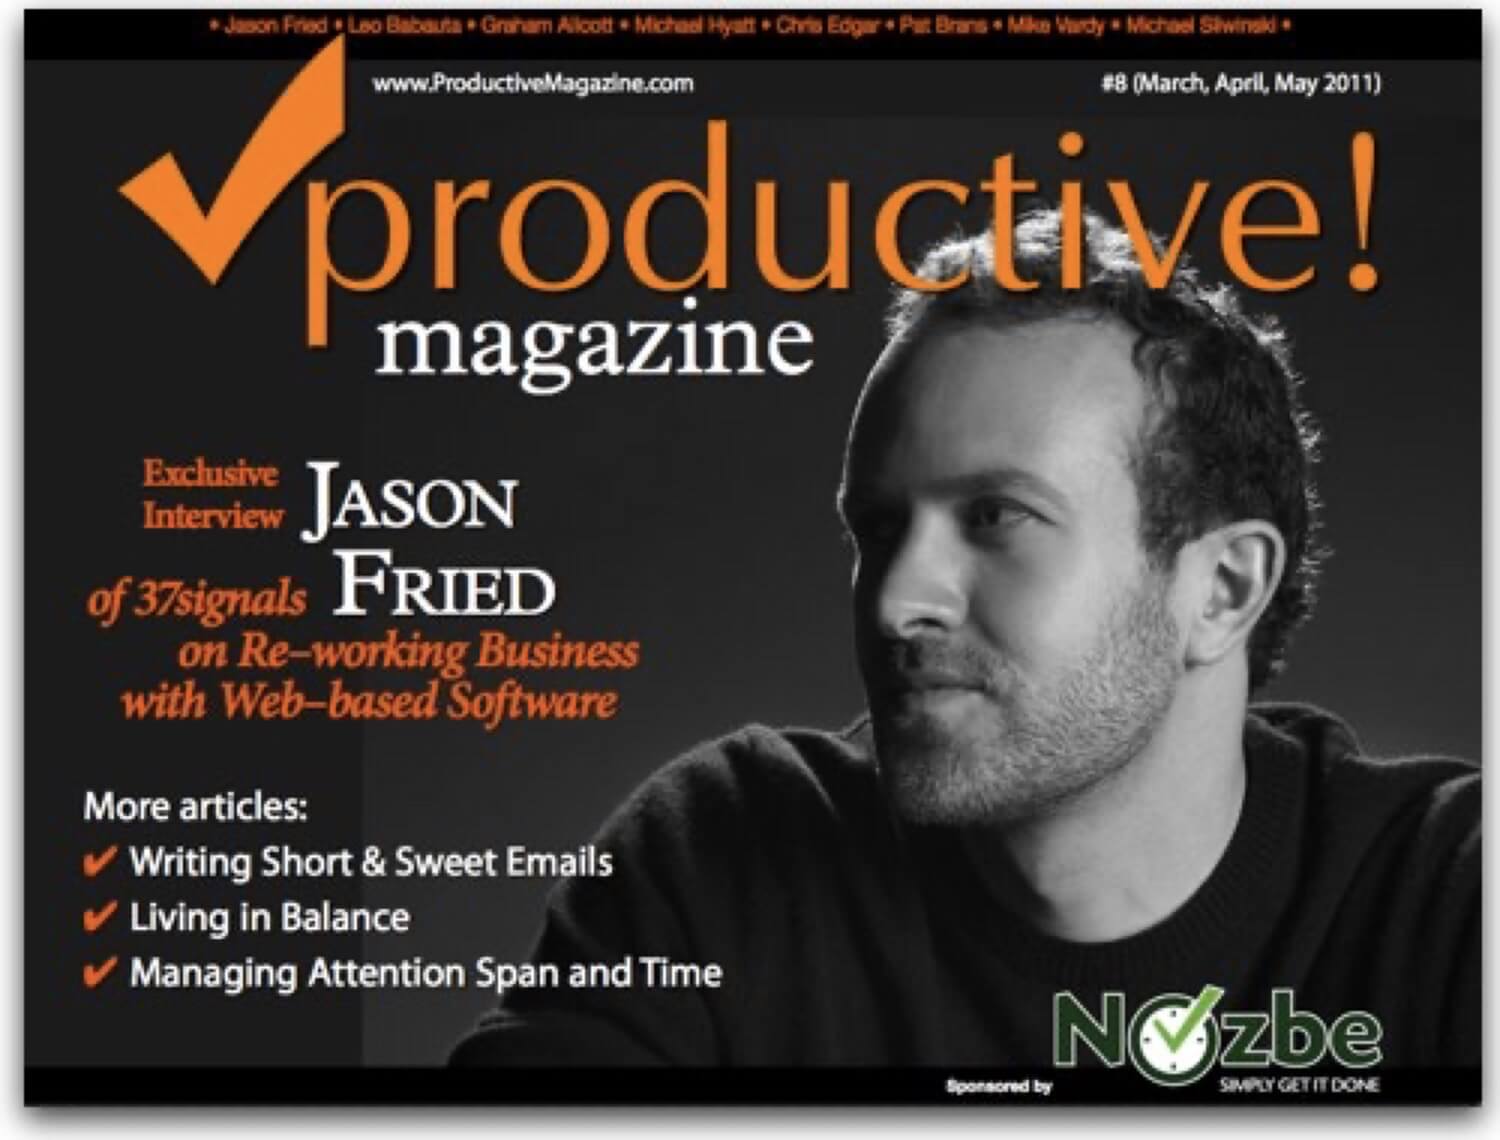 Jason Fried in the Productive! Magazine #8